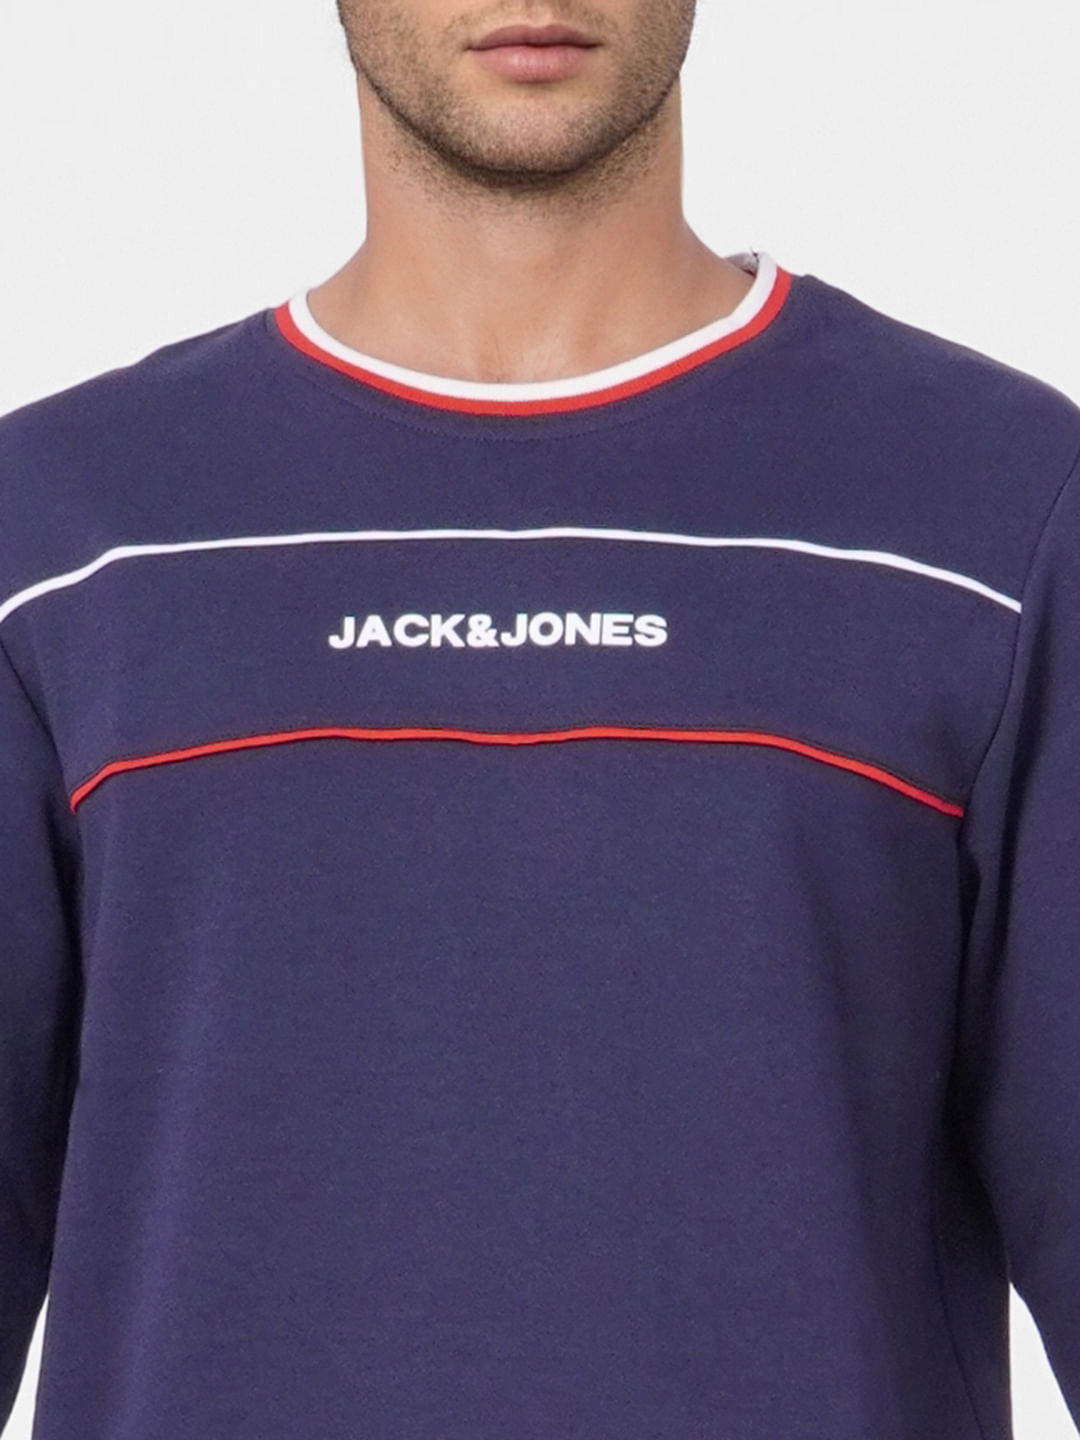 Blue/Navy Blue S MEN FASHION Jumpers & Sweatshirts Hoodie Jack & Jones sweatshirt discount 56% 